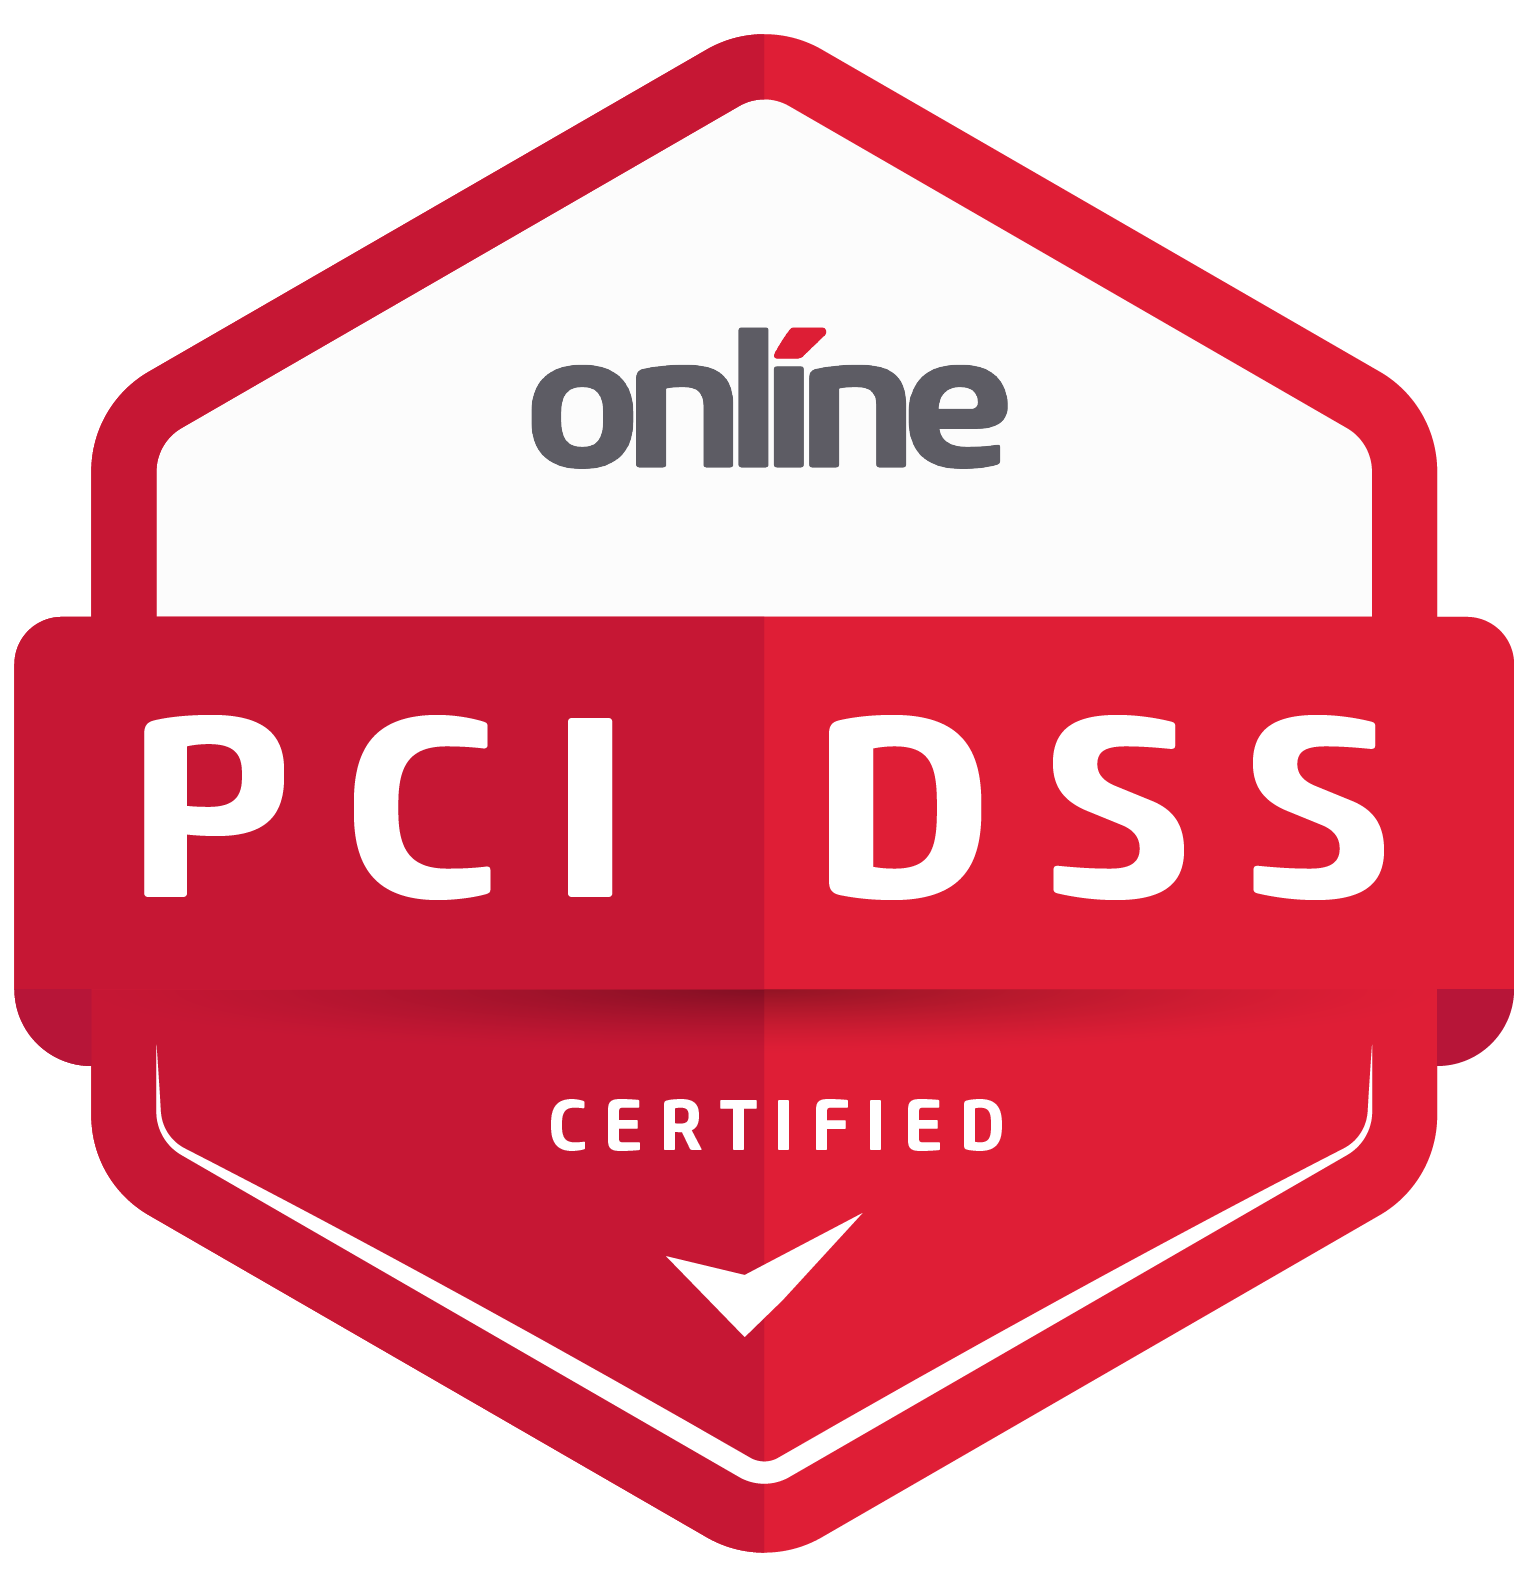 PCIDSS certified